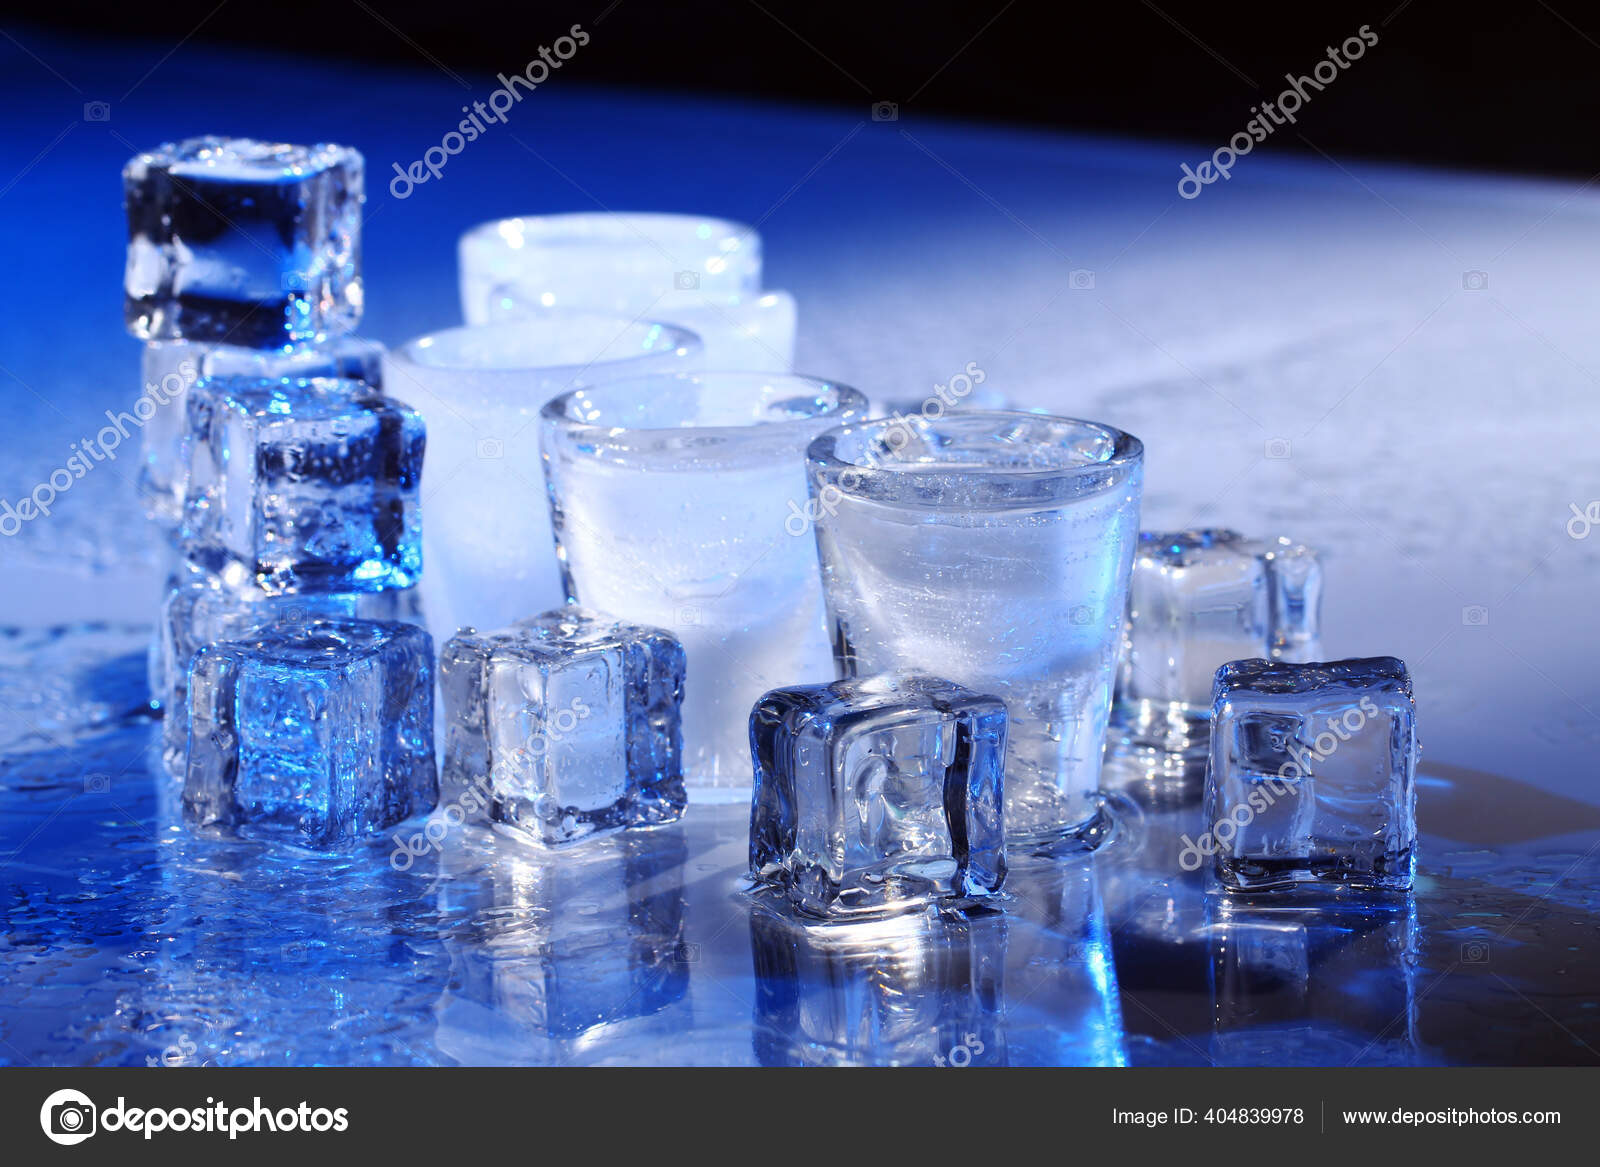 https://st4.depositphotos.com/32856862/40483/i/1600/depositphotos_404839978-stock-photo-frozen-glasses-ice-cubes-cold.jpg